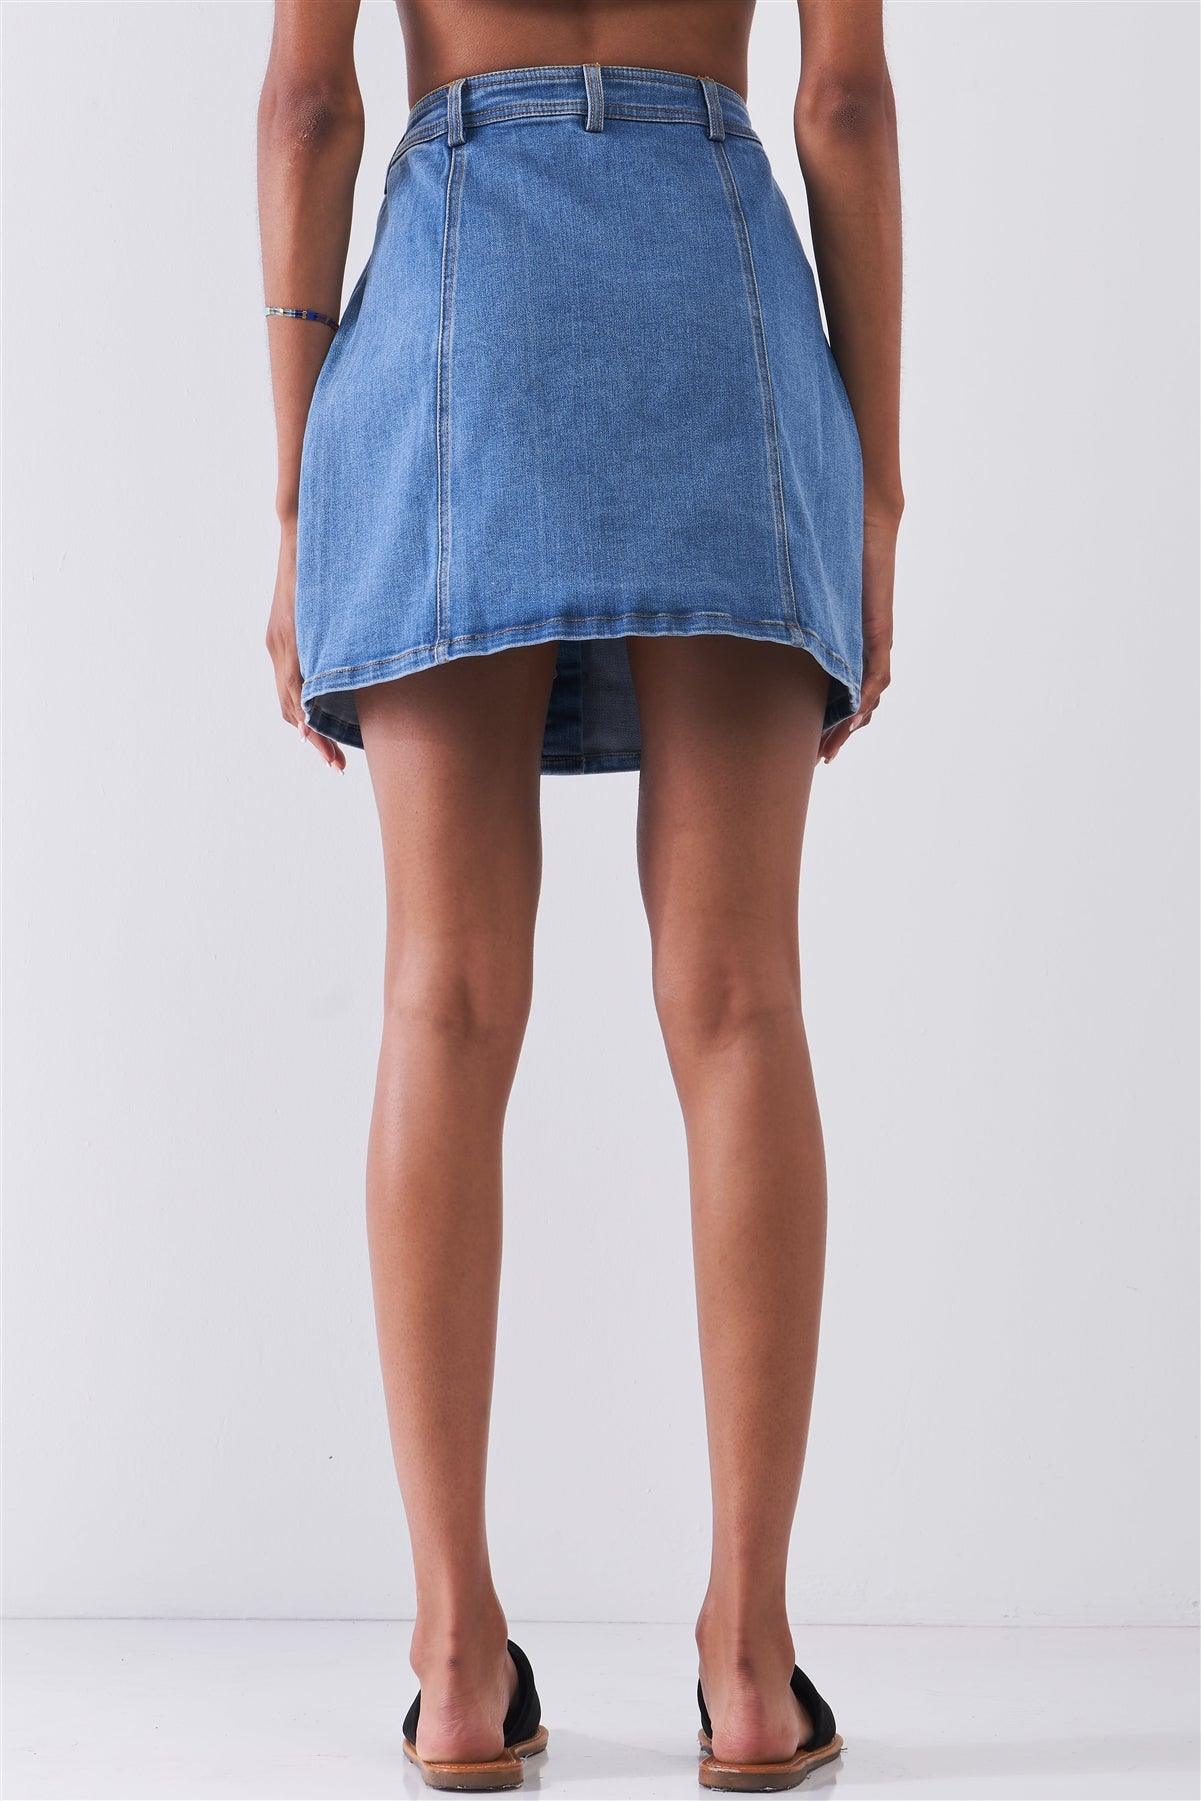 OG Vintage Blue Denim High Waist Button-Down Two Front Pockets Detail Mini Skirt /1-2-2-1